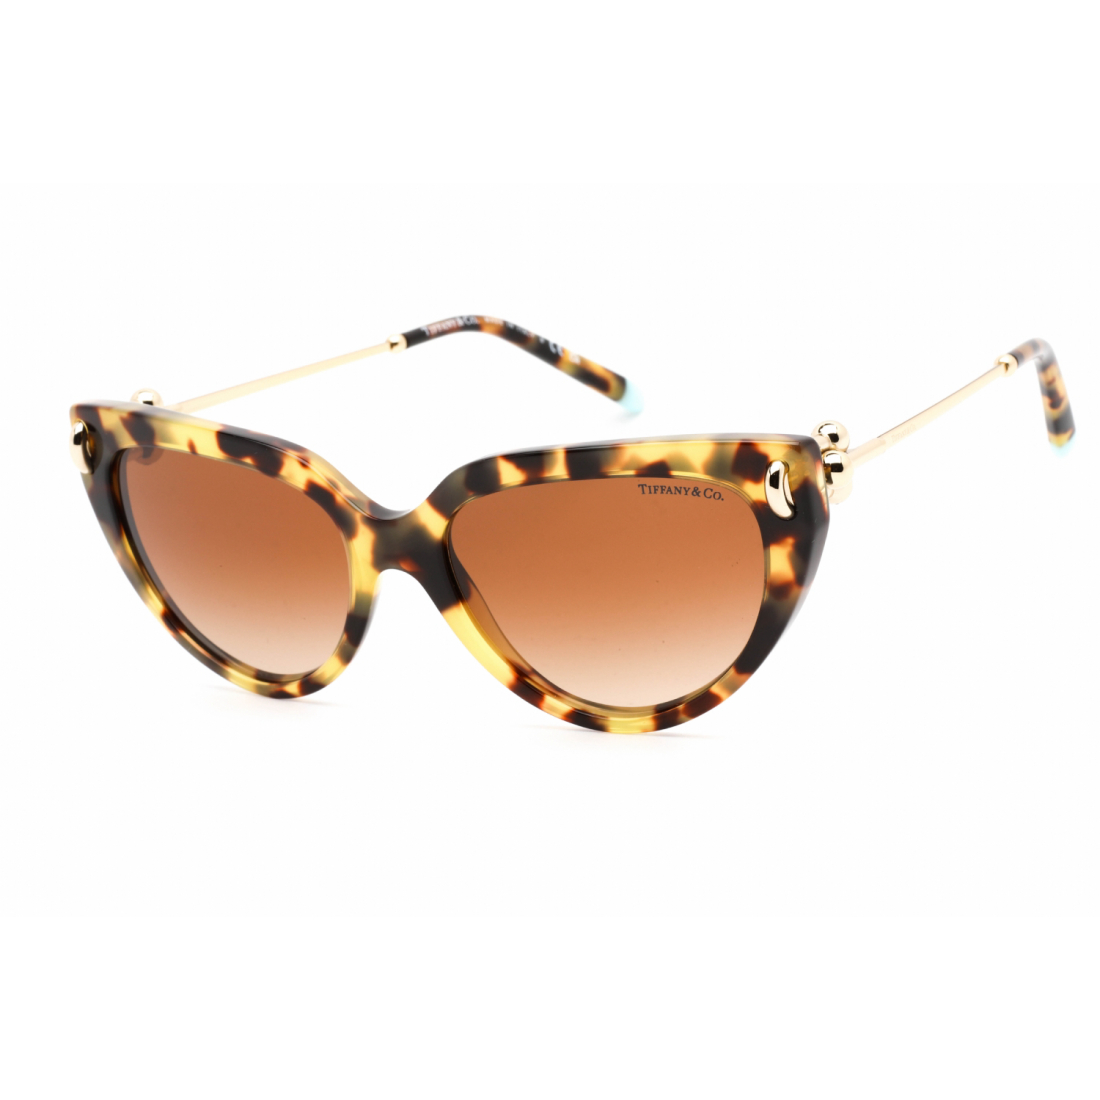 Women's '0TF4195' Sunglasses